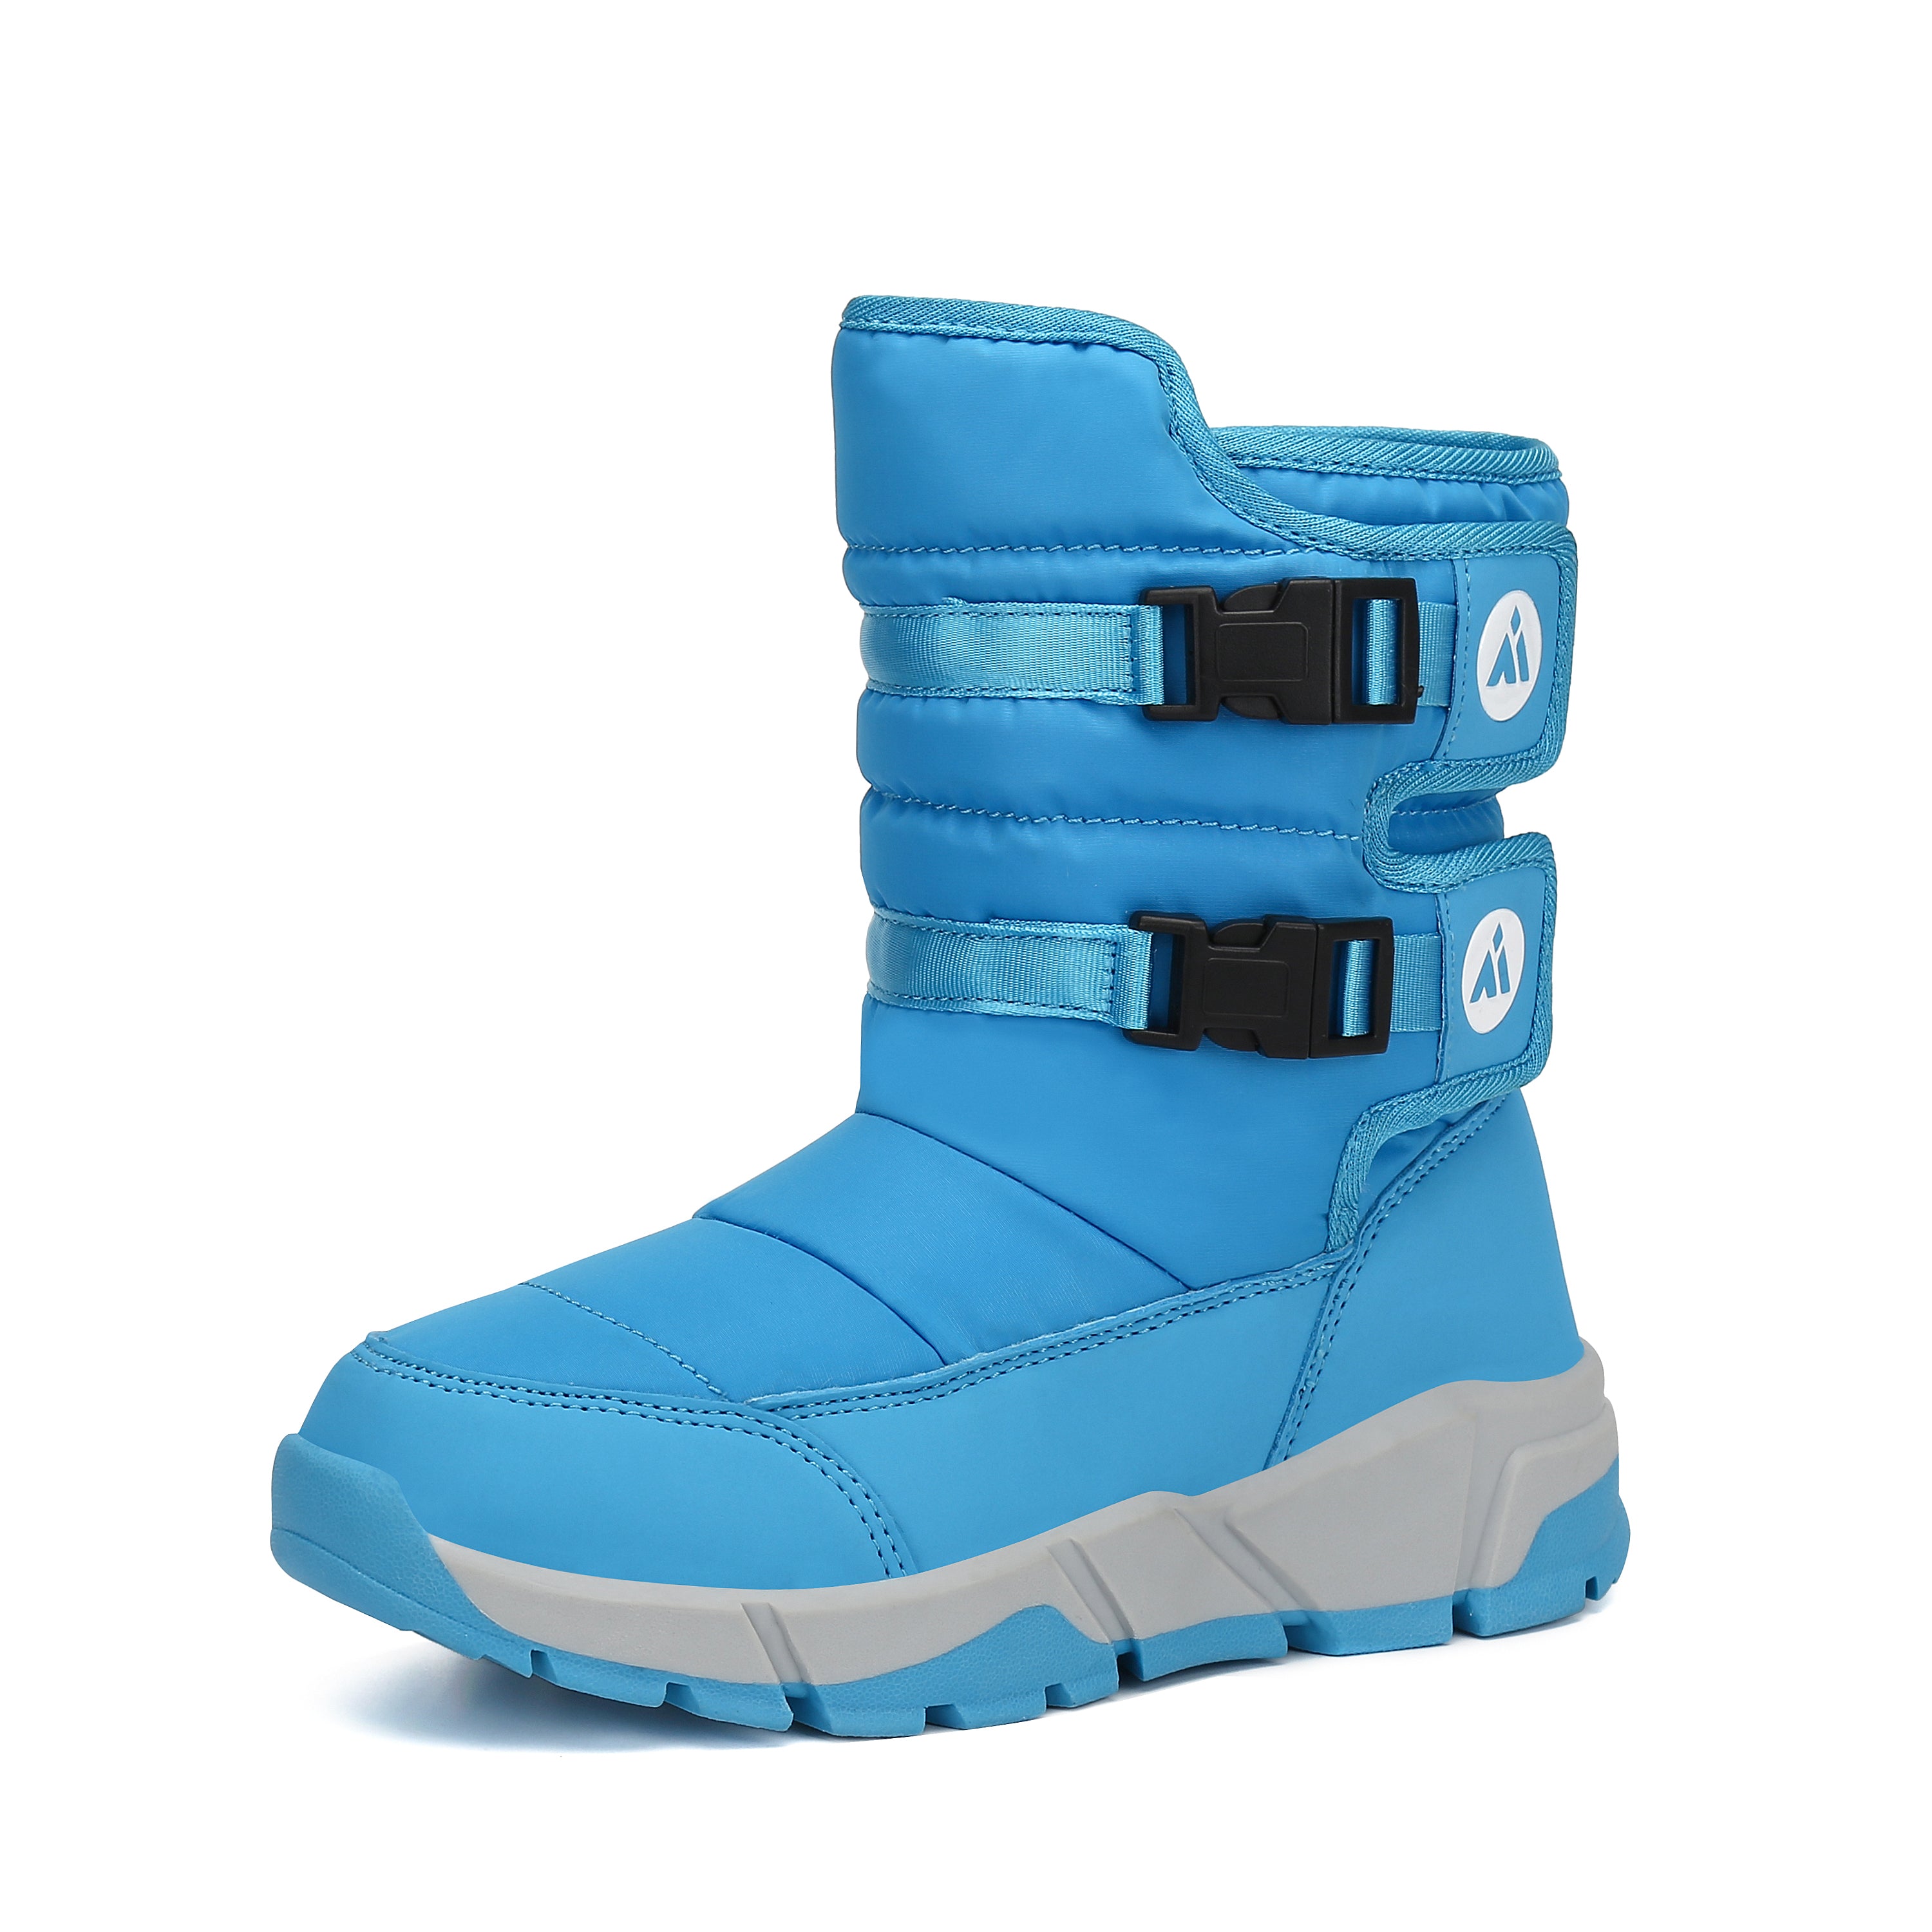 Girls Boys Toddler/Little Kid/Big Kid Winter Snow Boots Warm Waterproof Anti-Slip Anti-Collision Hight-Cut for Outdoor Skiing